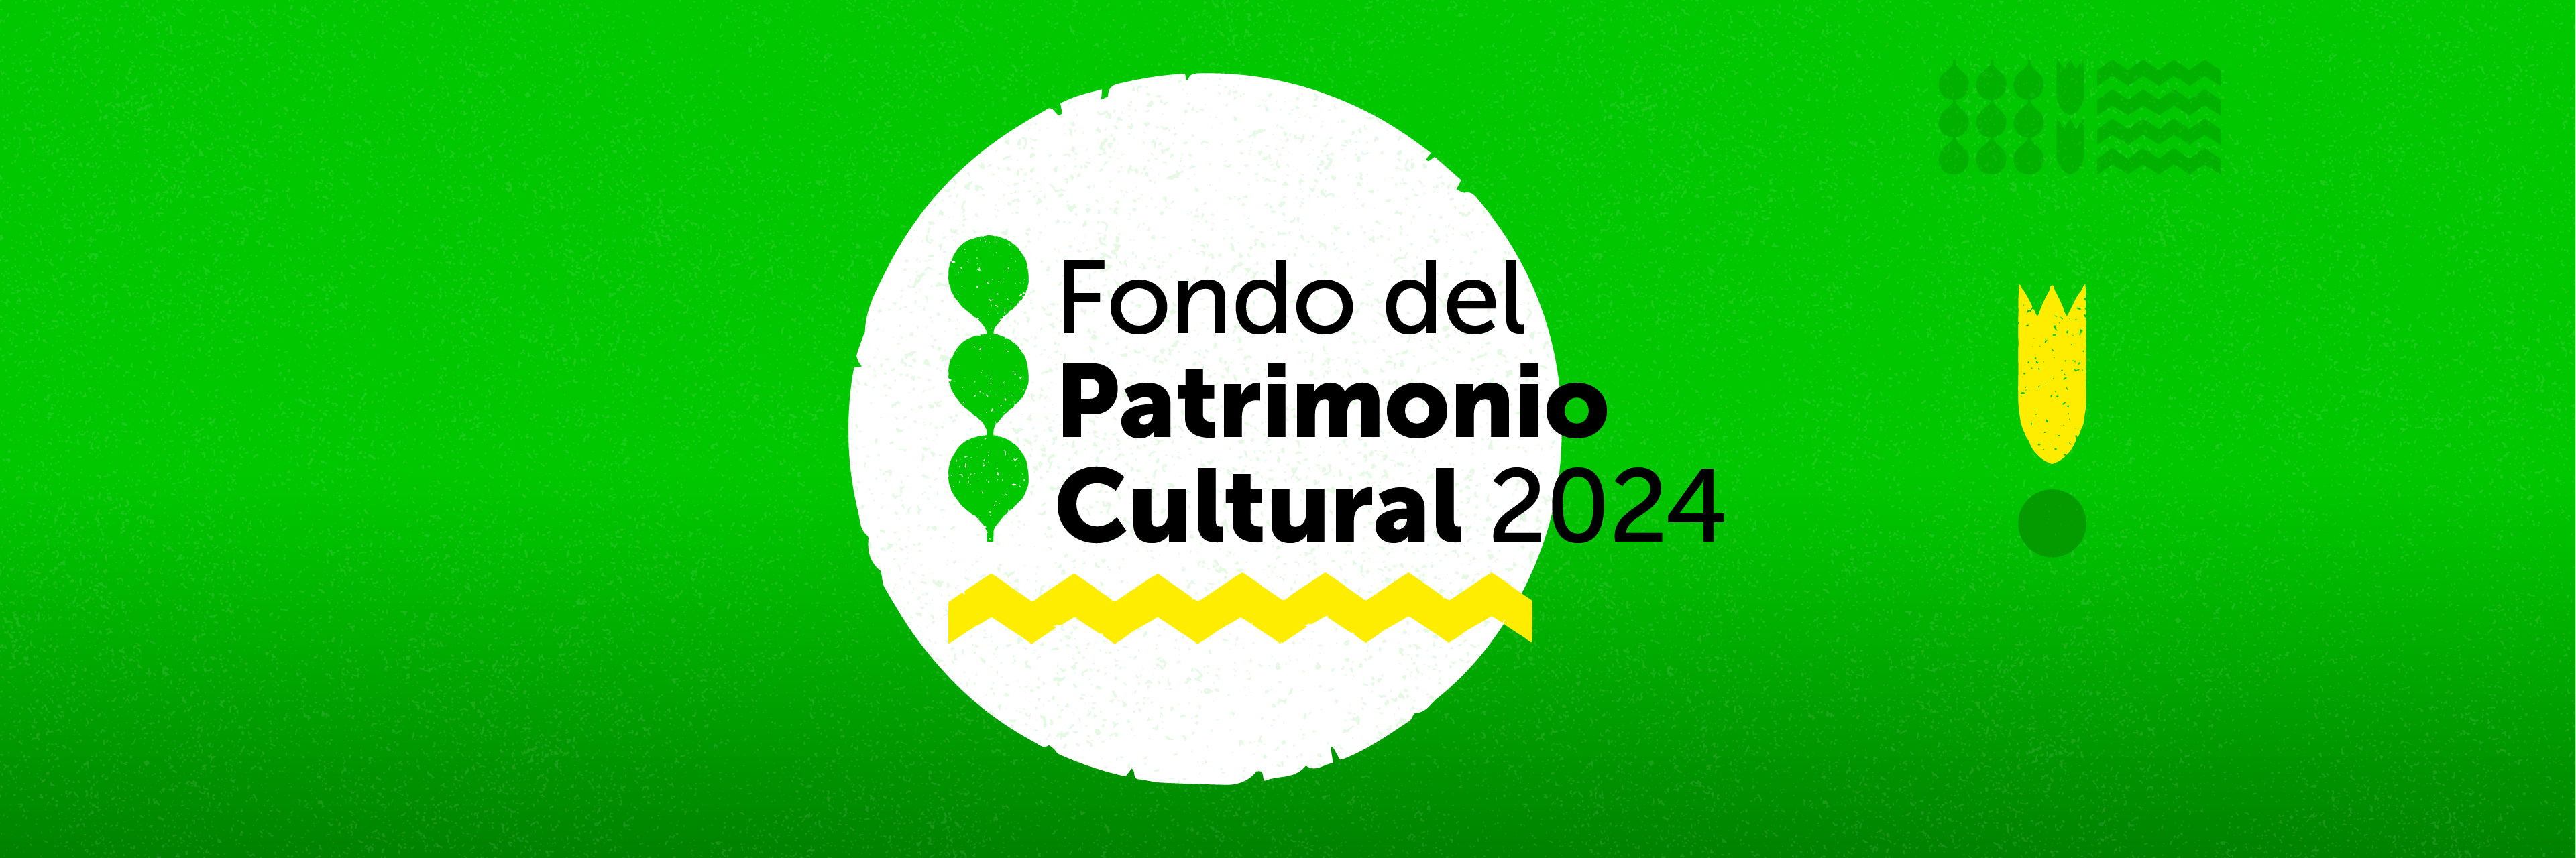 Gráfica Fondo del Patrimonio Cultural 2024